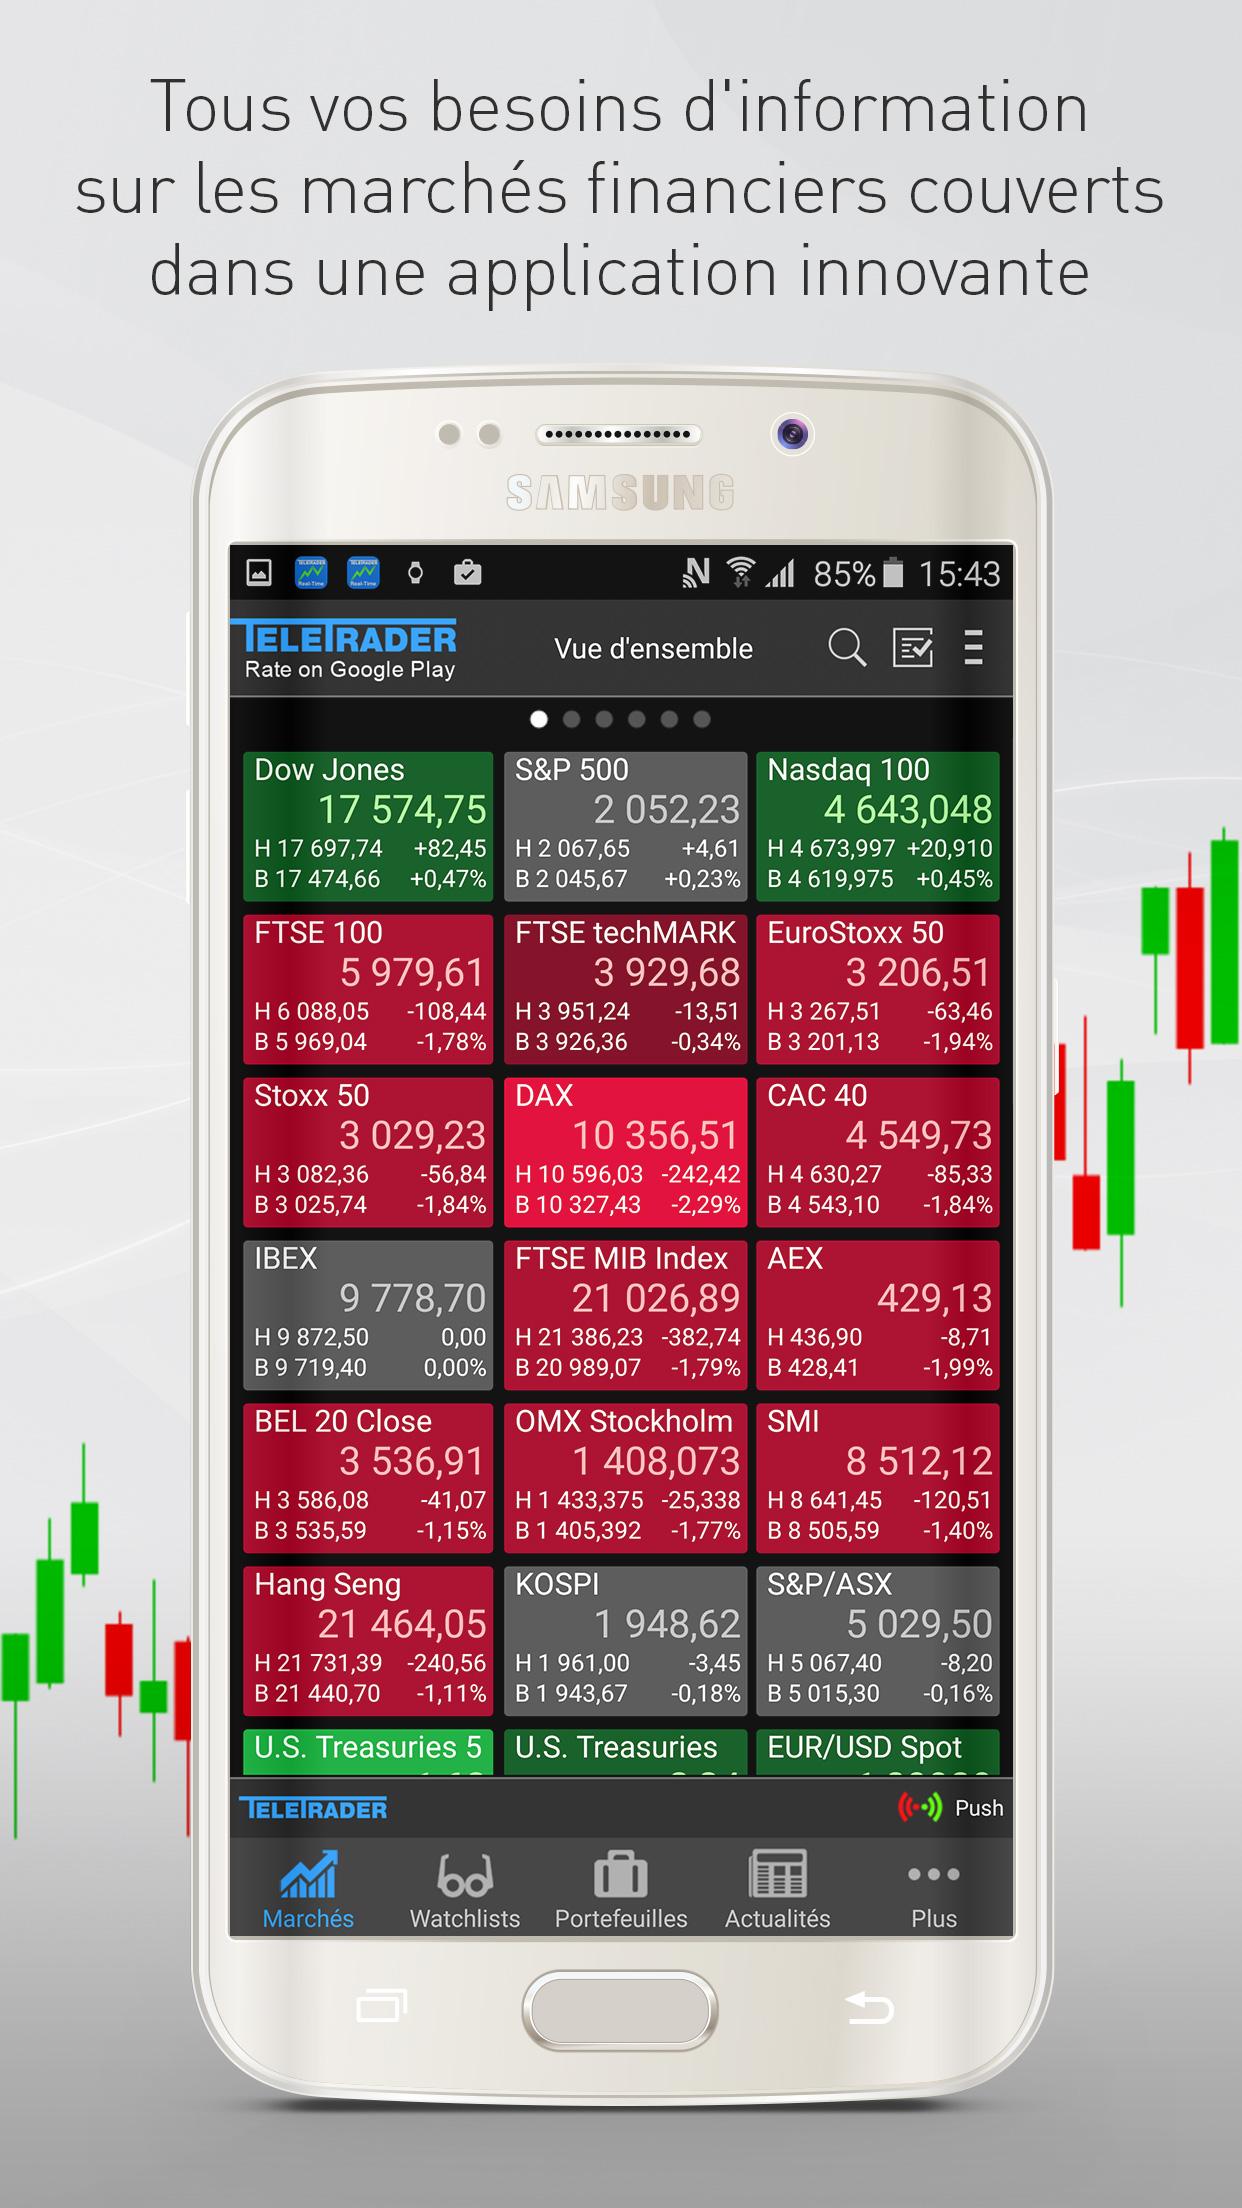 Android application StockMarkets by baha - finance, markets & news screenshort